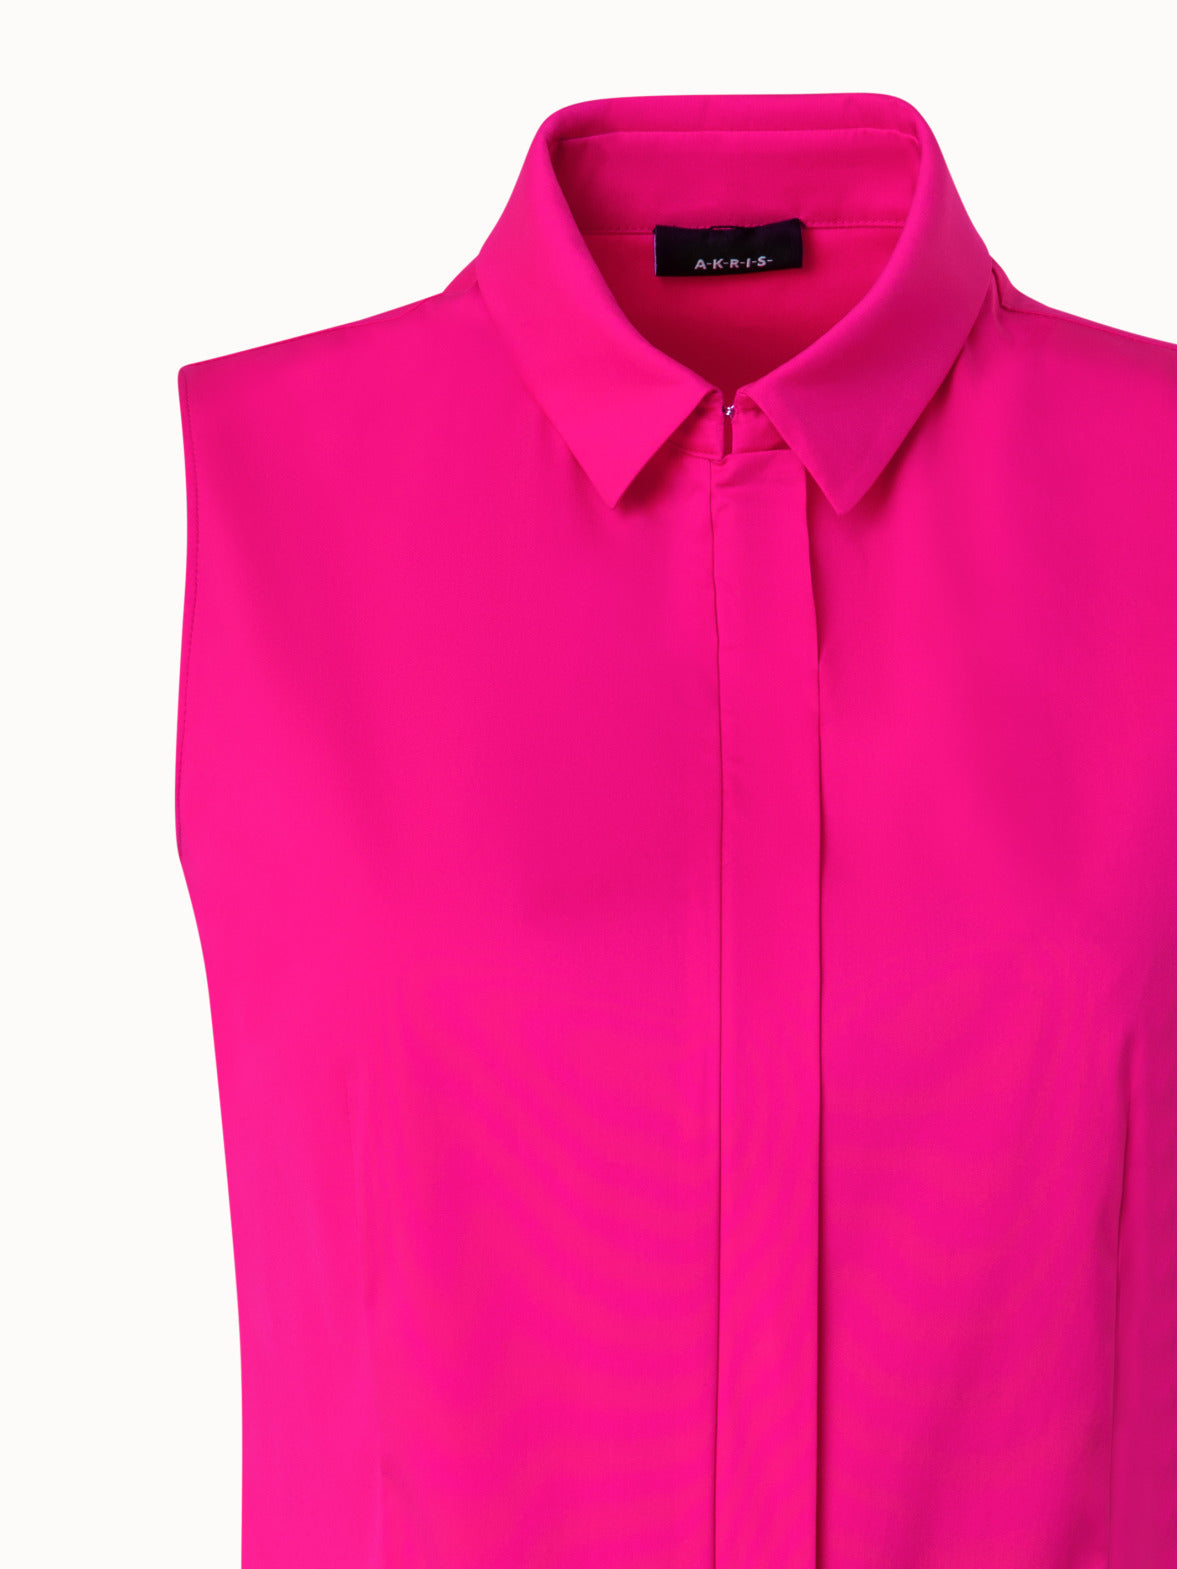 Pink Cotton Poplin Collar Extender for Shirt Blouse Collared Top